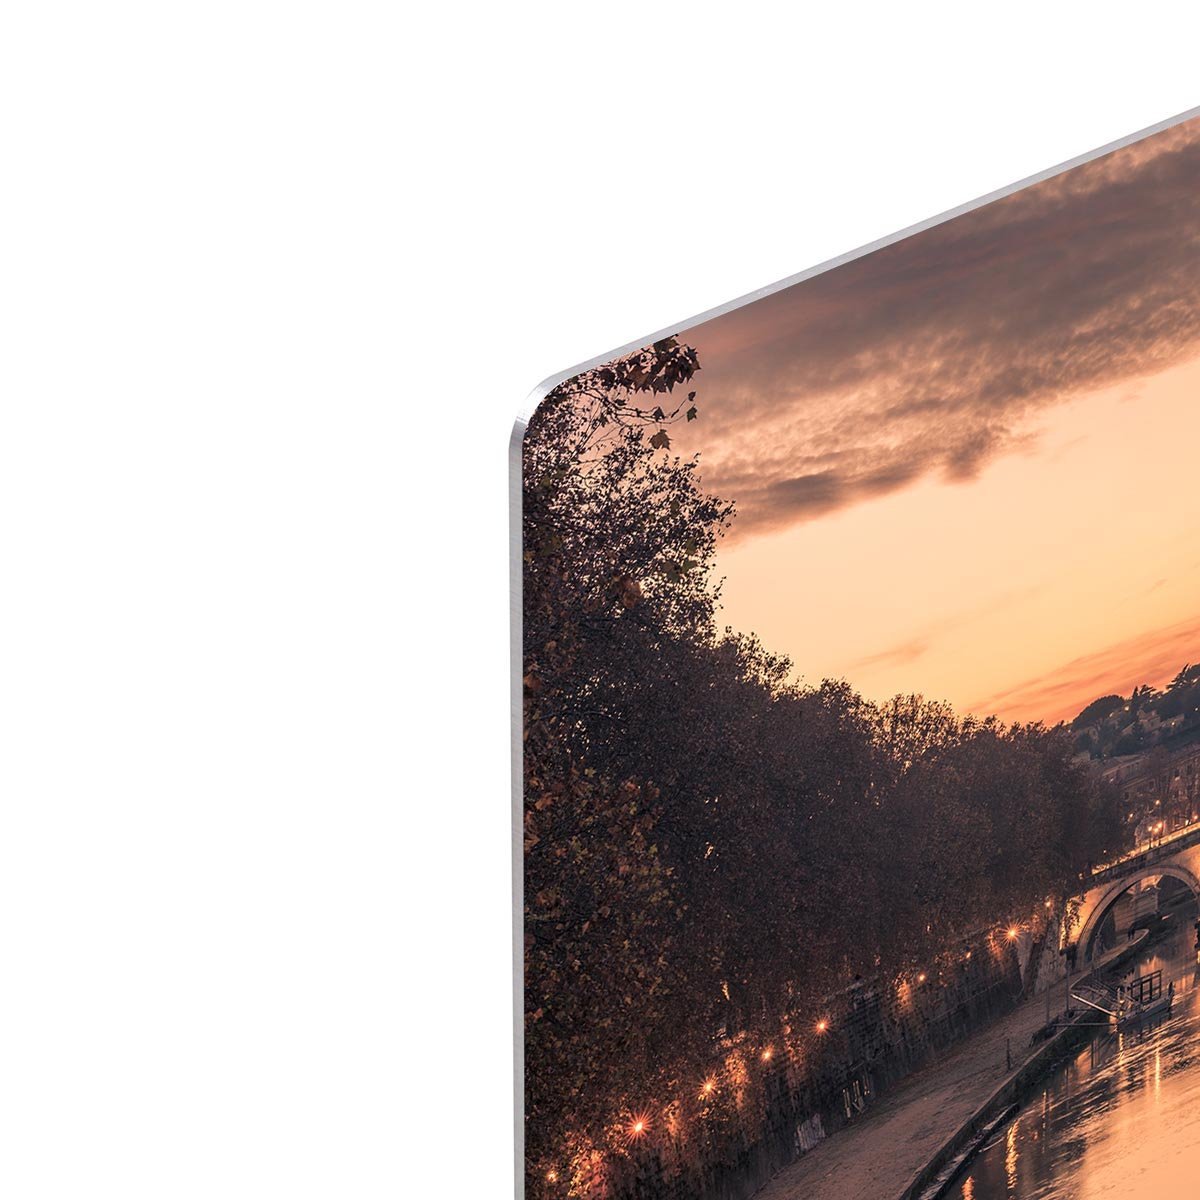 Saint Angelo Bridge and Tiber River in the sunset HD Metal Print